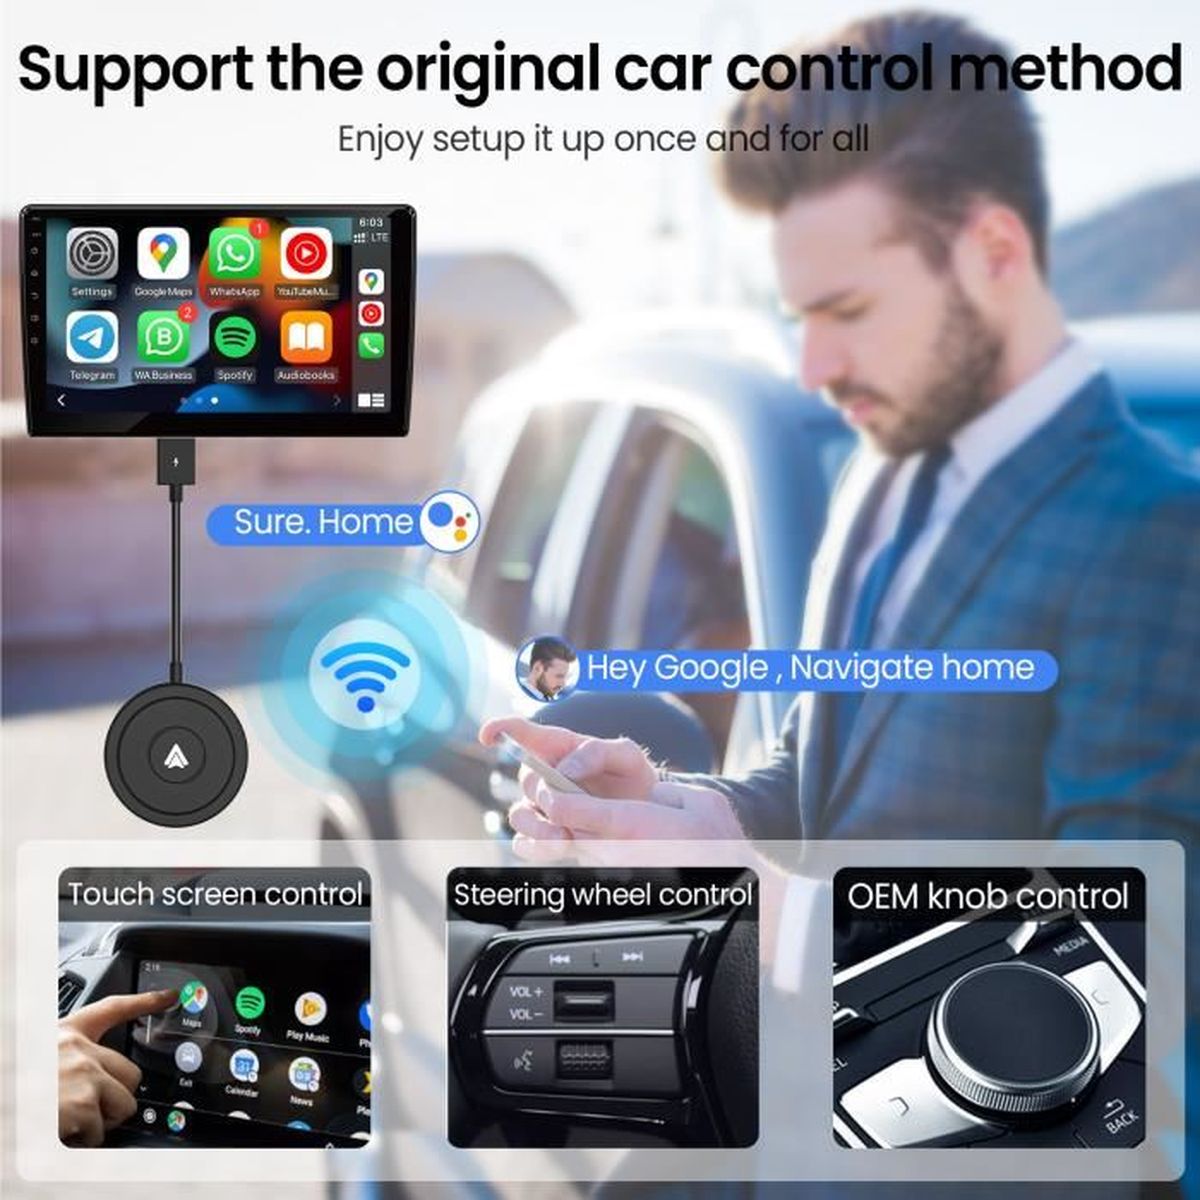 Carplay sans fil Android Auto Boîte de modules pour VW Skoda Octavia A5 Golf  7 Polo Passat B8 2.4G WIFI-GPS-DSP-2 RCA-Plug and play - Cdiscount Auto